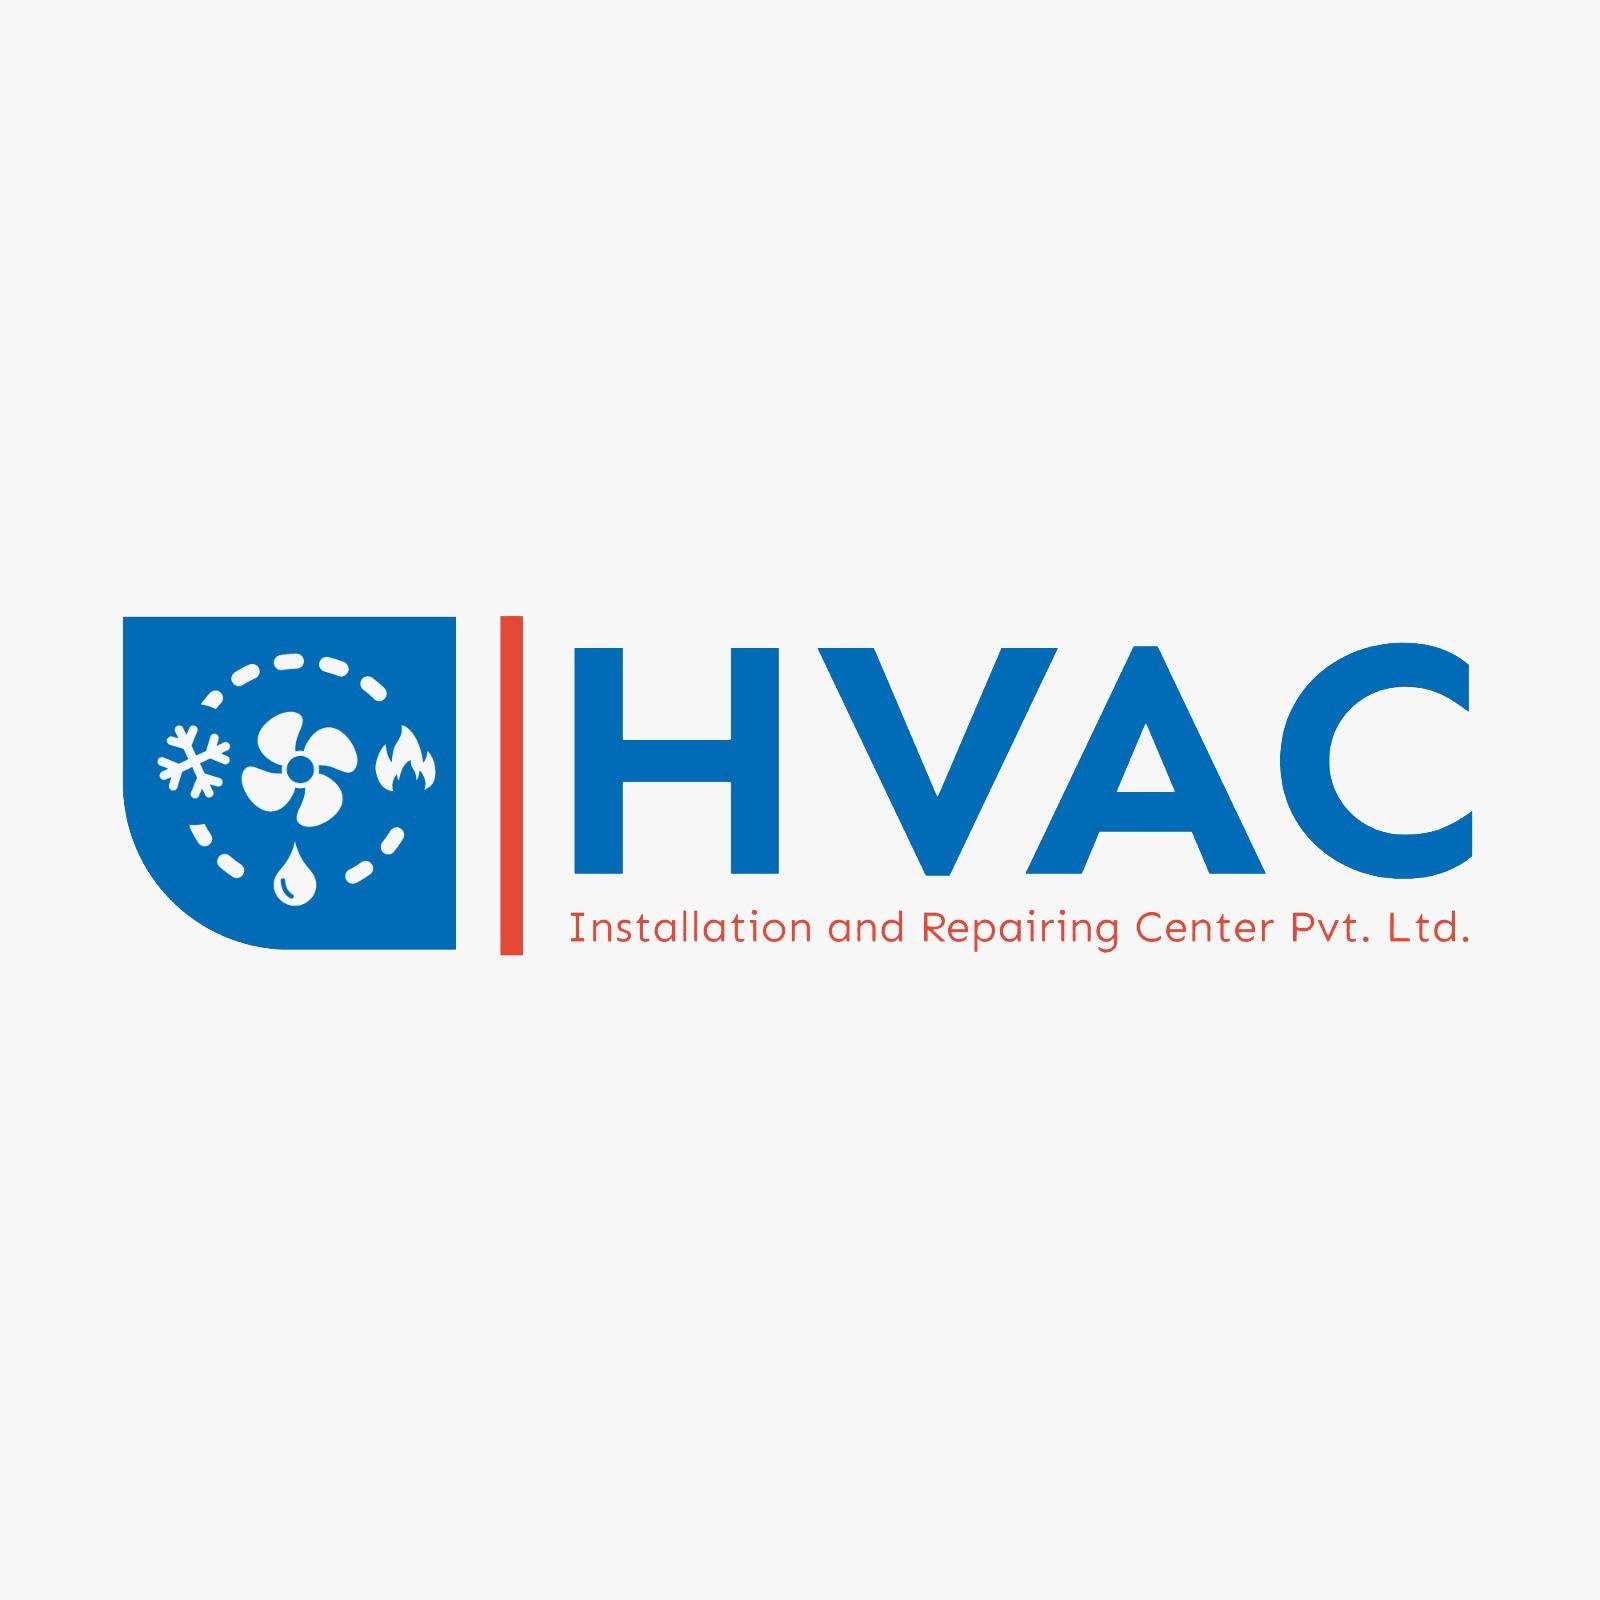 HVAC Installation and Repairing Center